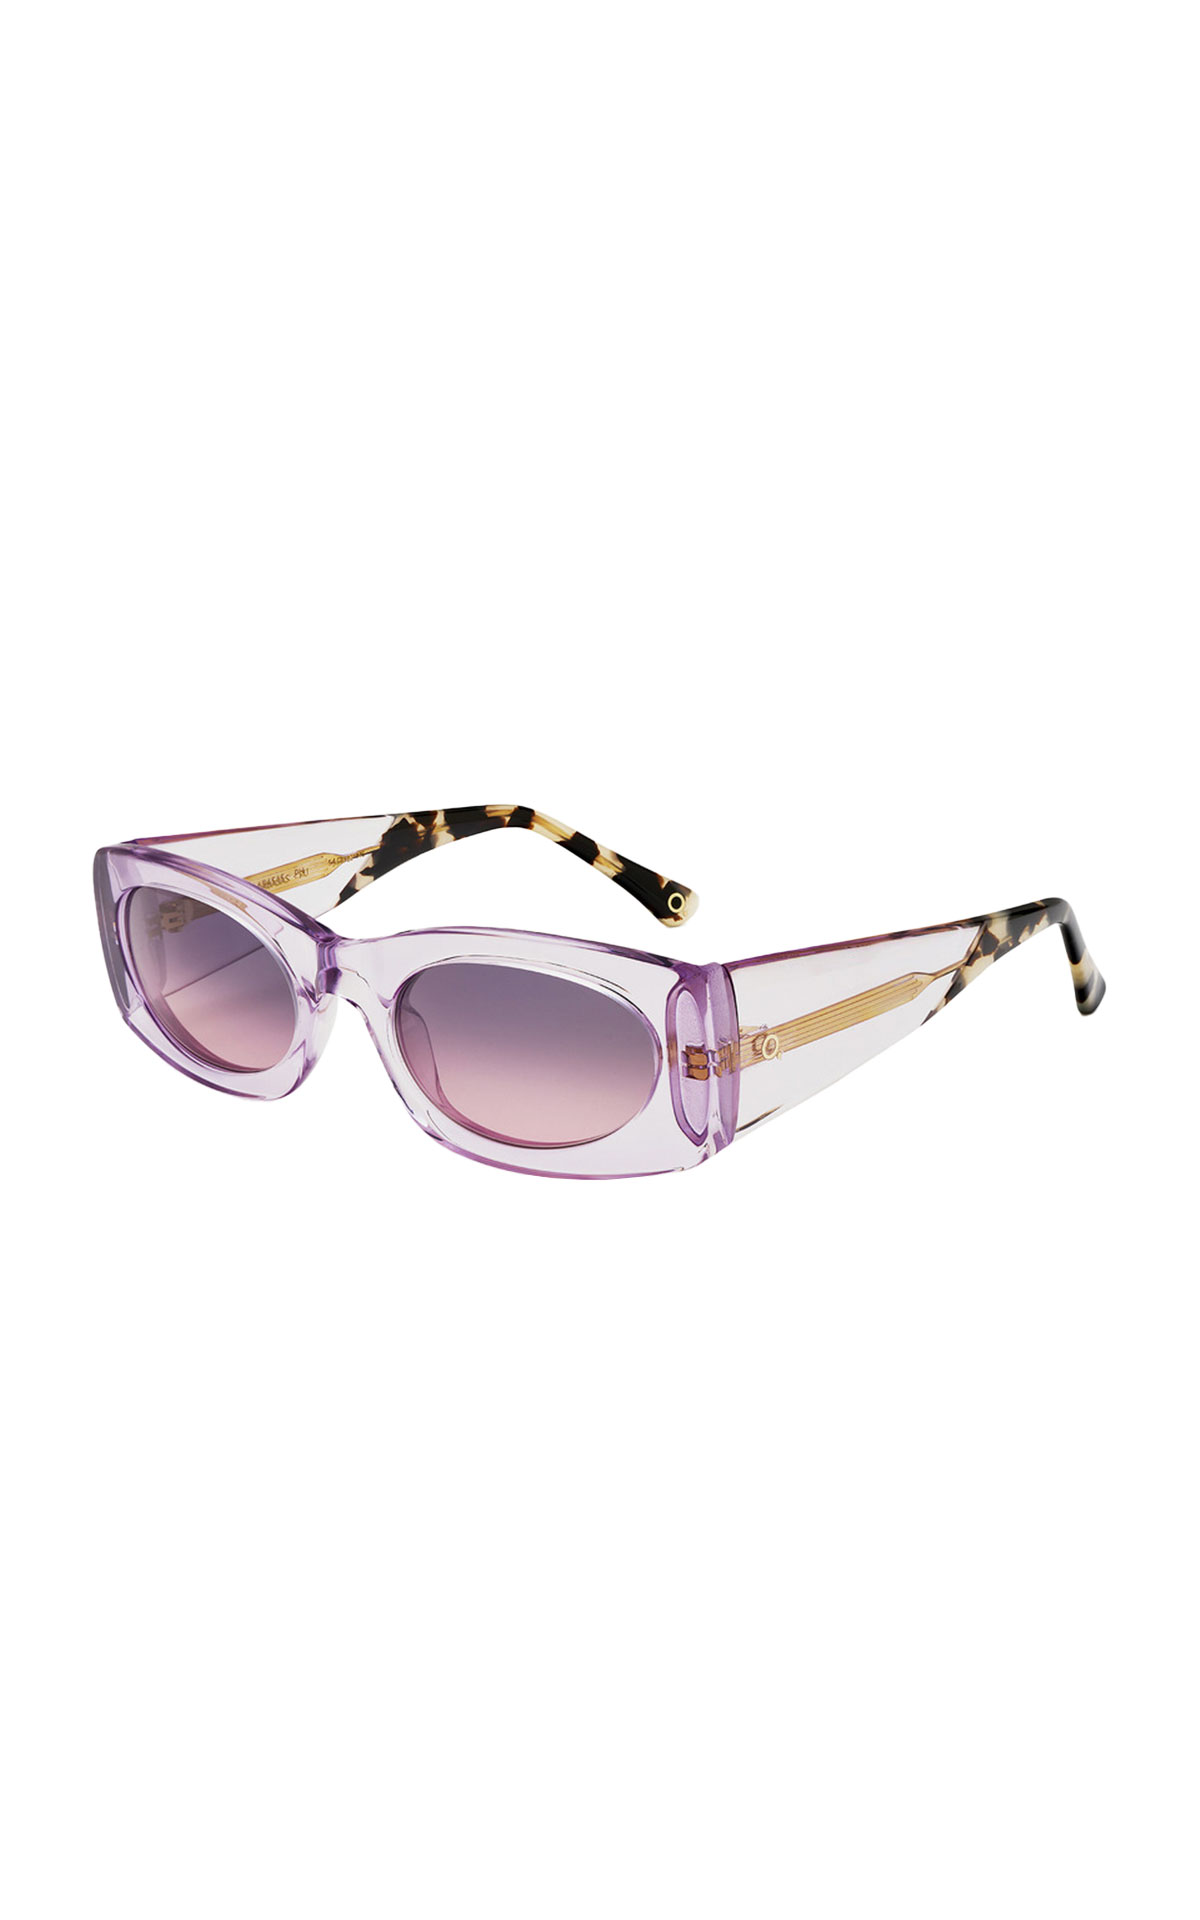 Purple Calabasas sunglasses Etnia Barcelona